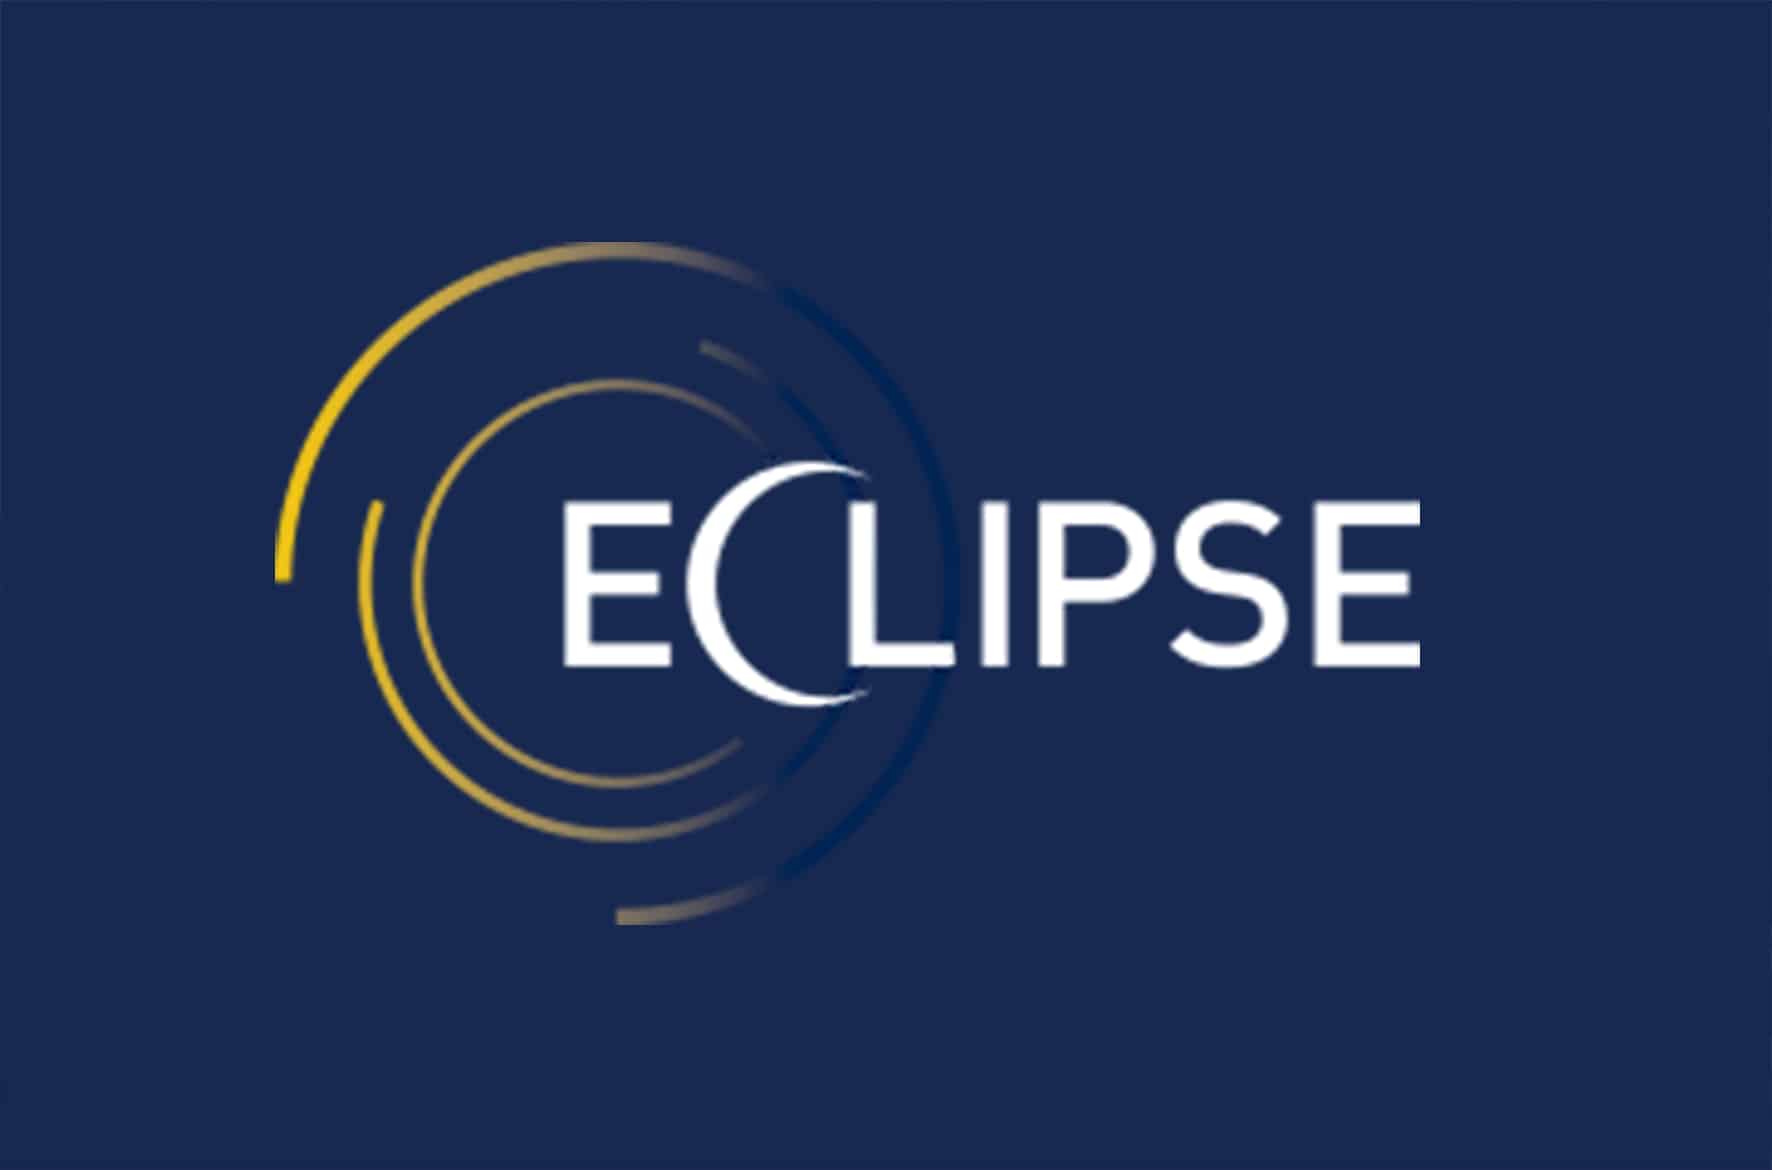 The logo for Eclipse Procurement